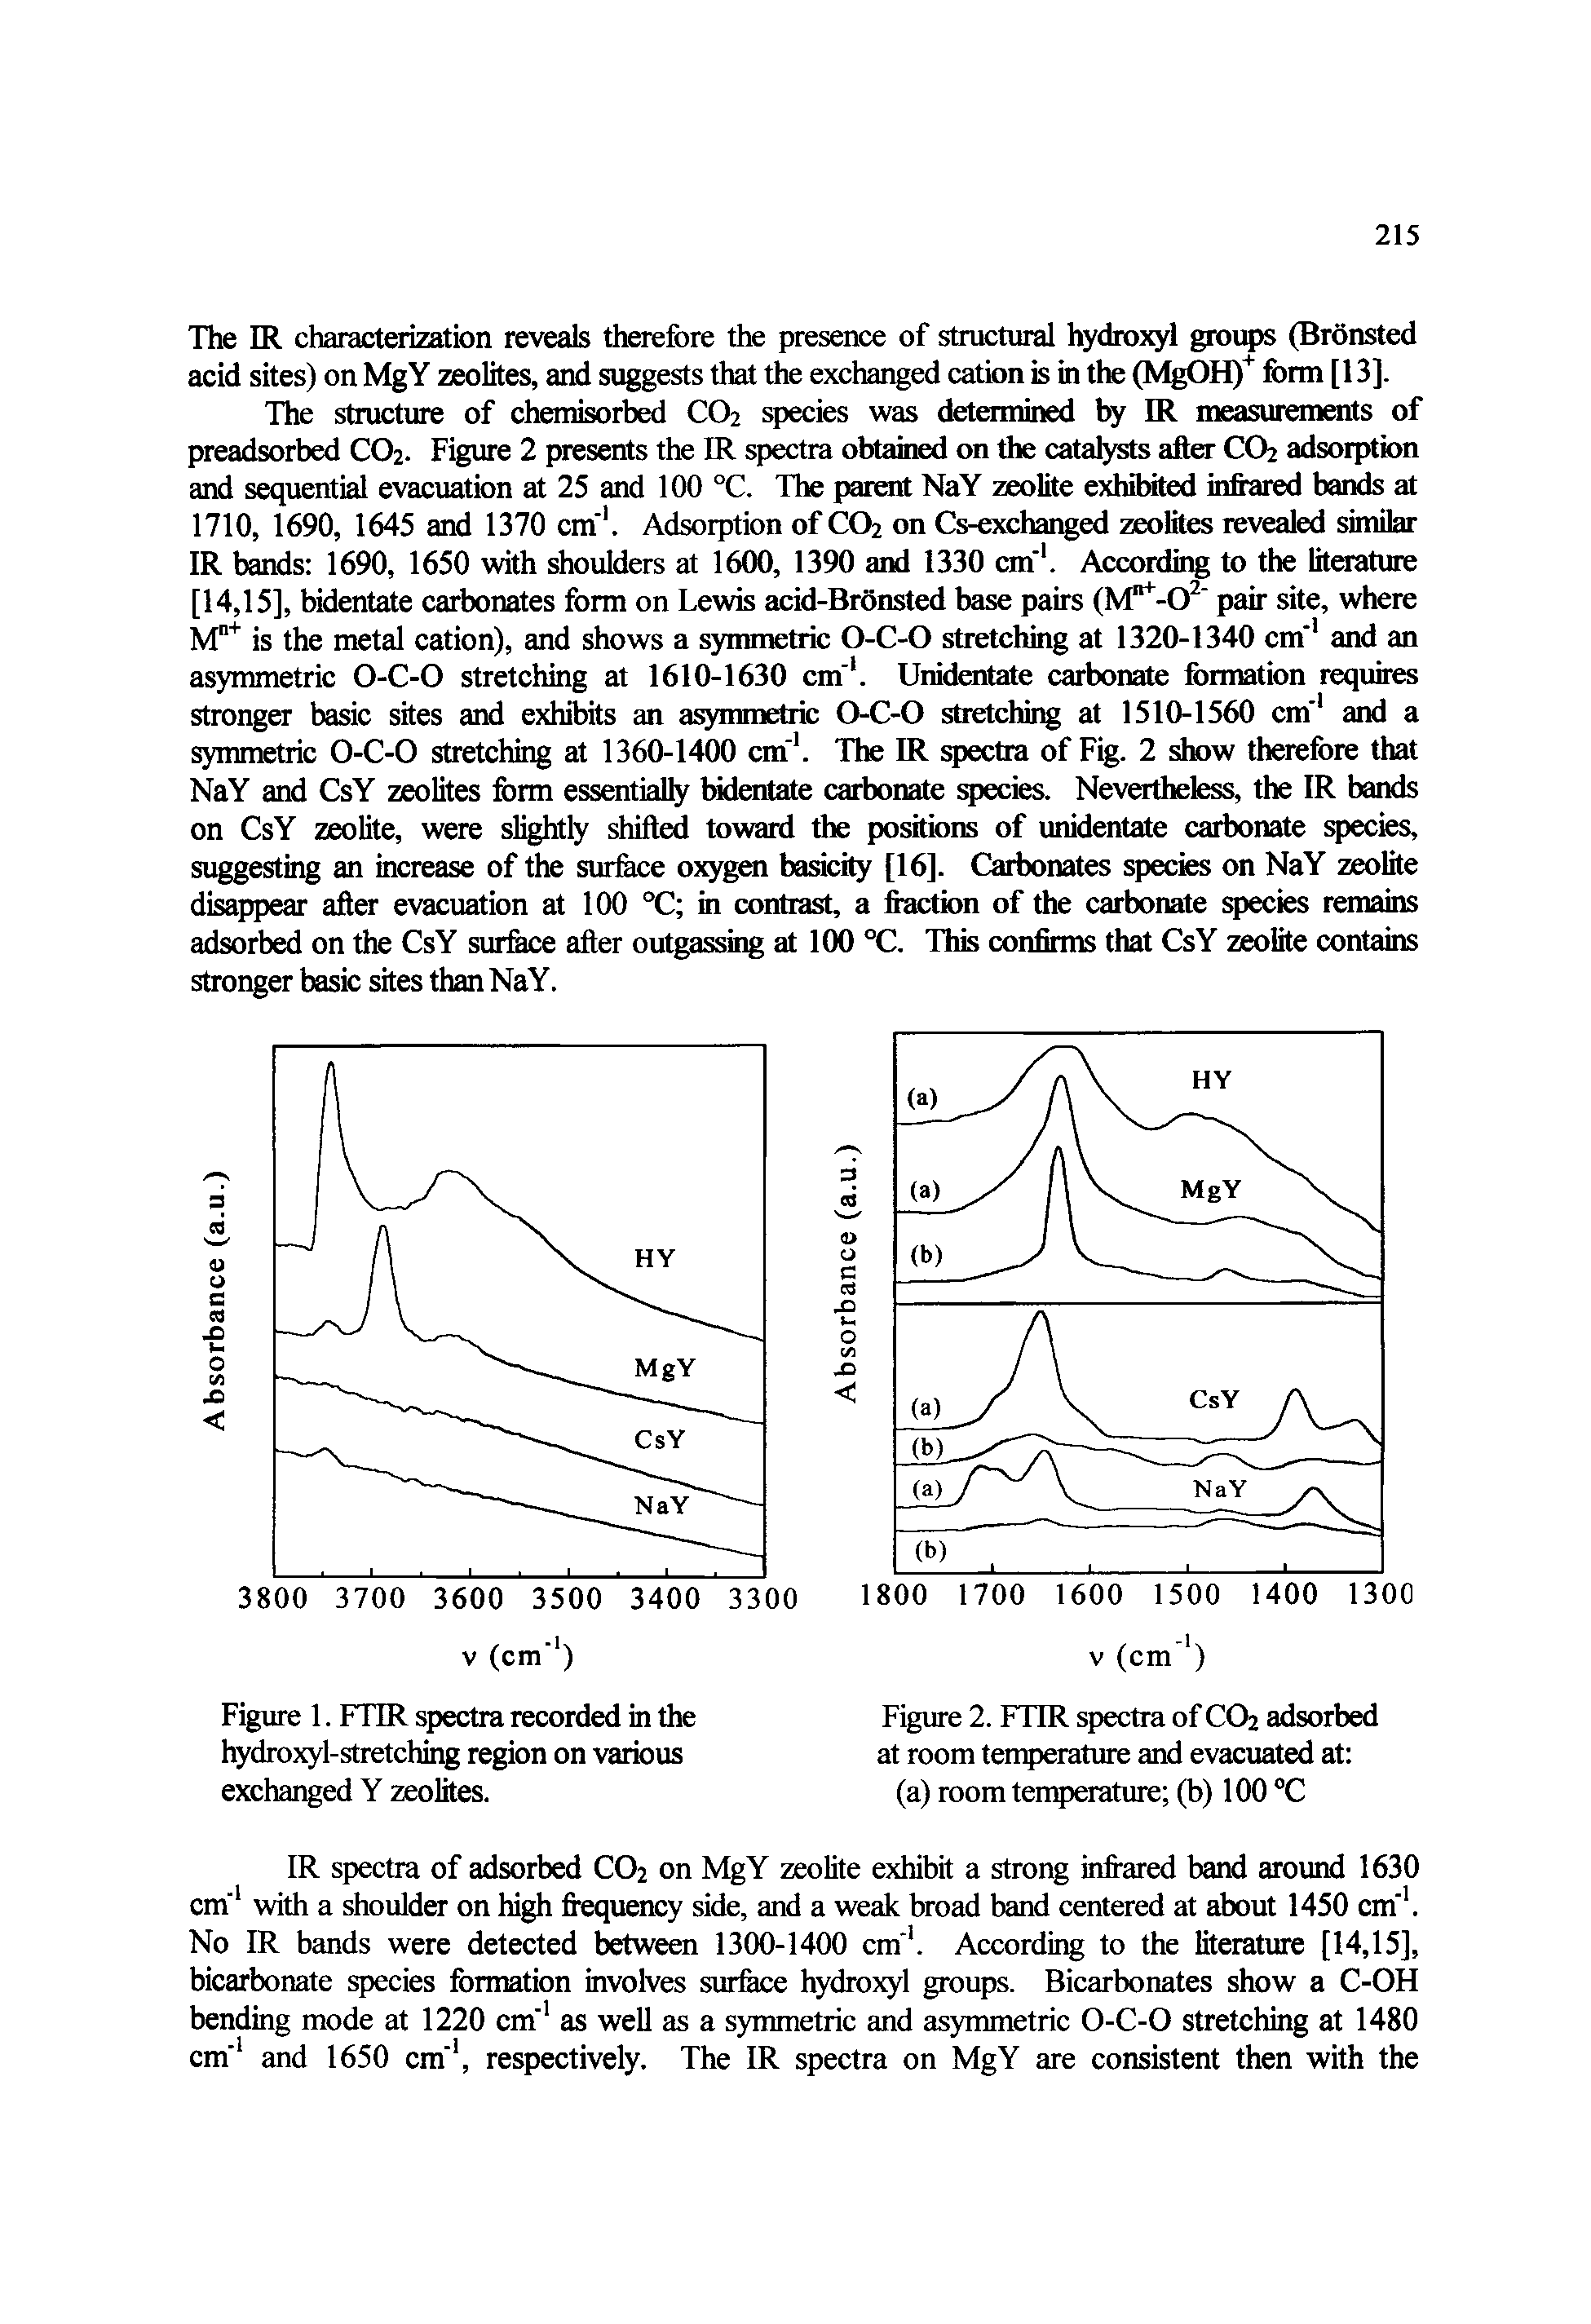 Figure 1. FTIR spectra recorded in the hydroxyl-stretching region on various exchanged Y zeolites.